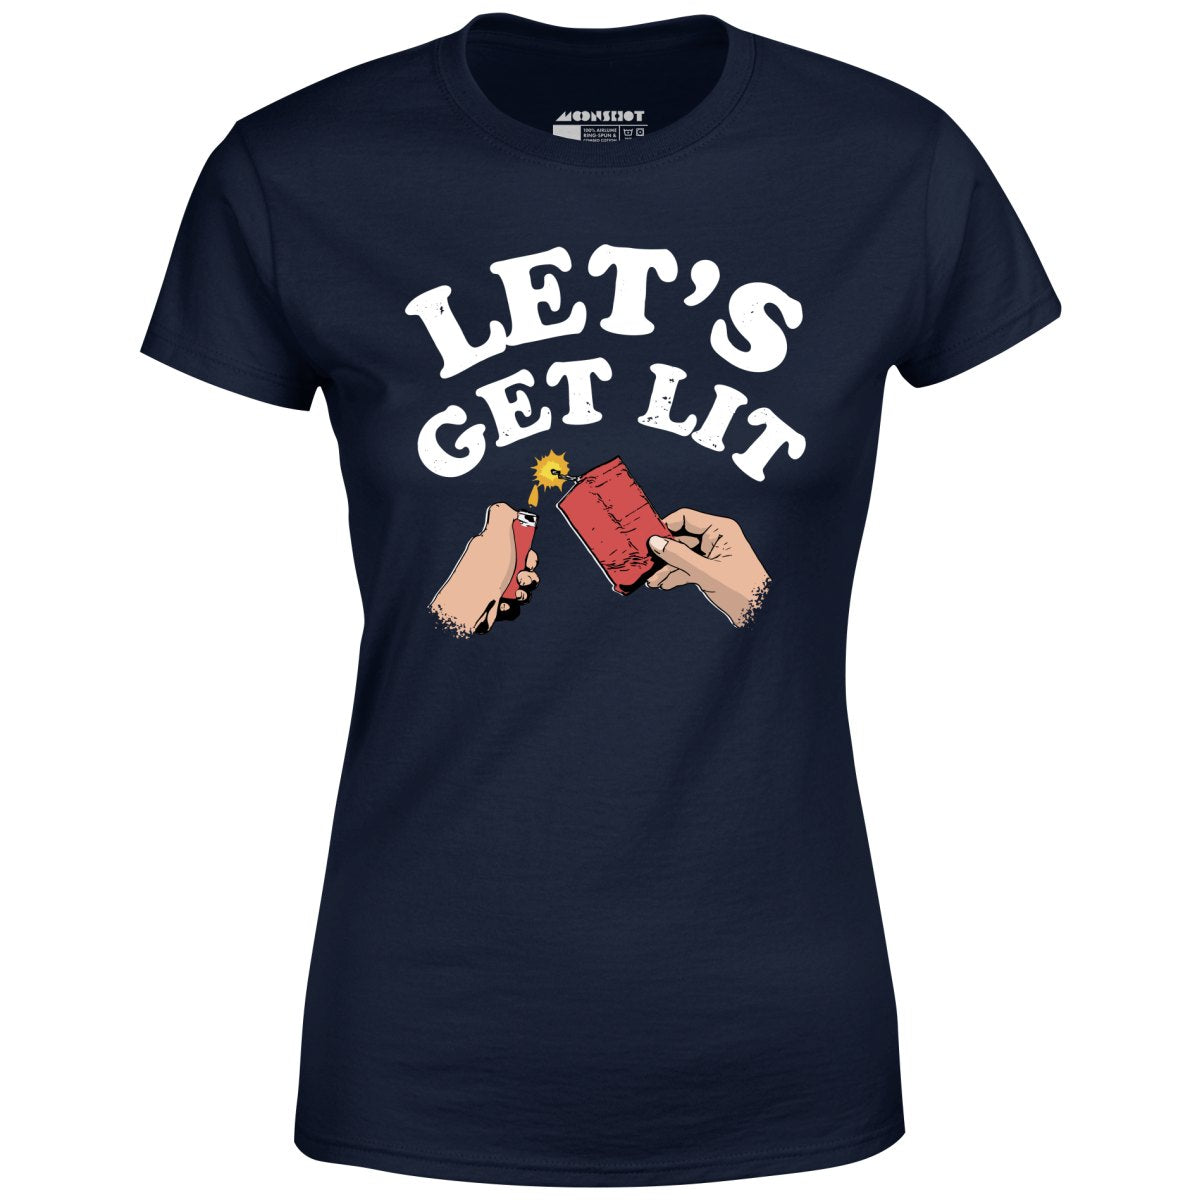 Let's Get Lit - Women's T-Shirt